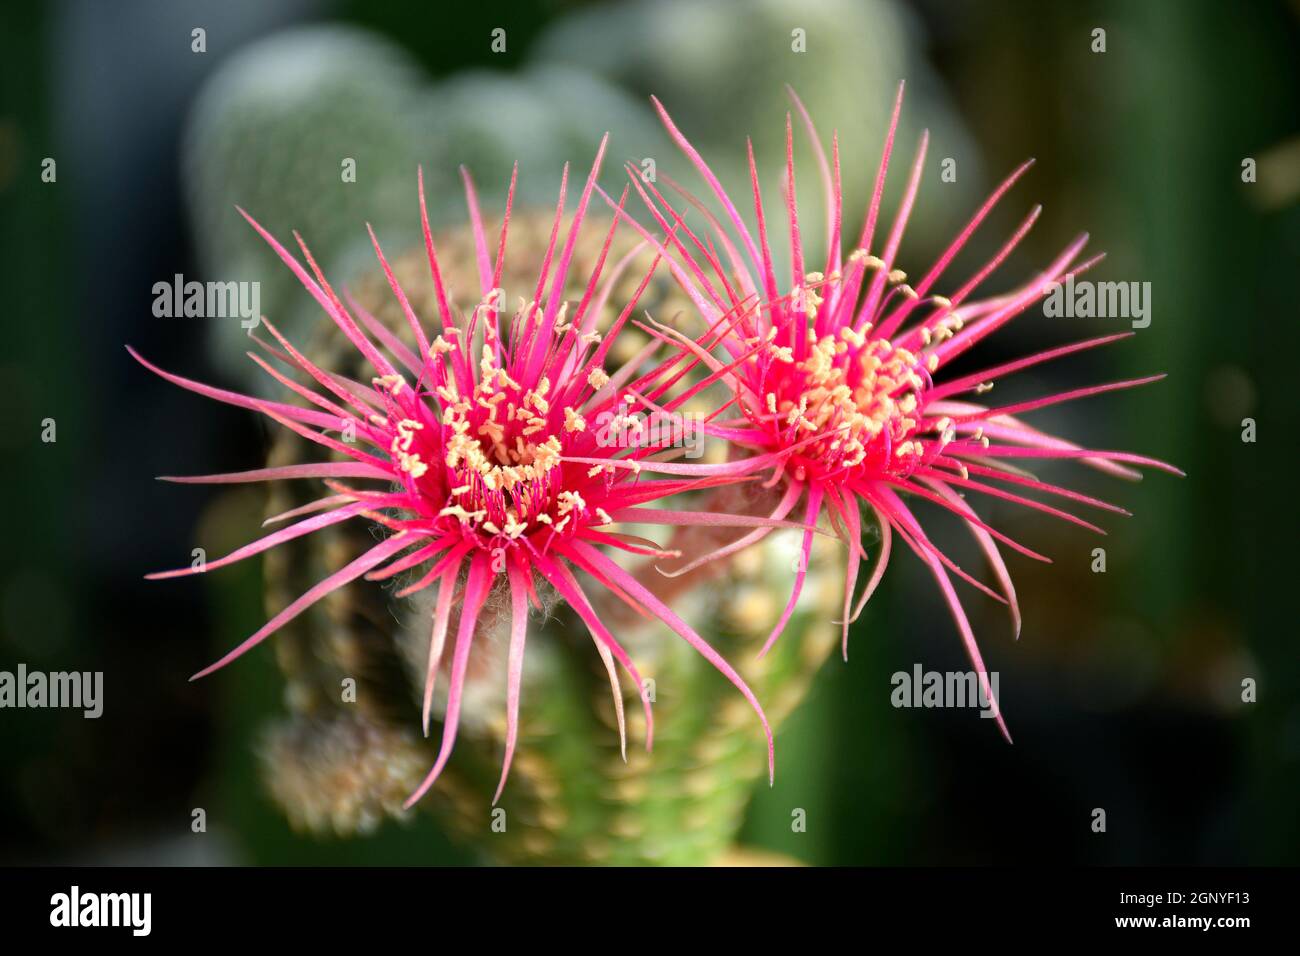 Lobivia spp. with pink shinshowa flower style on blurred cactus garden background background. Stock Photo